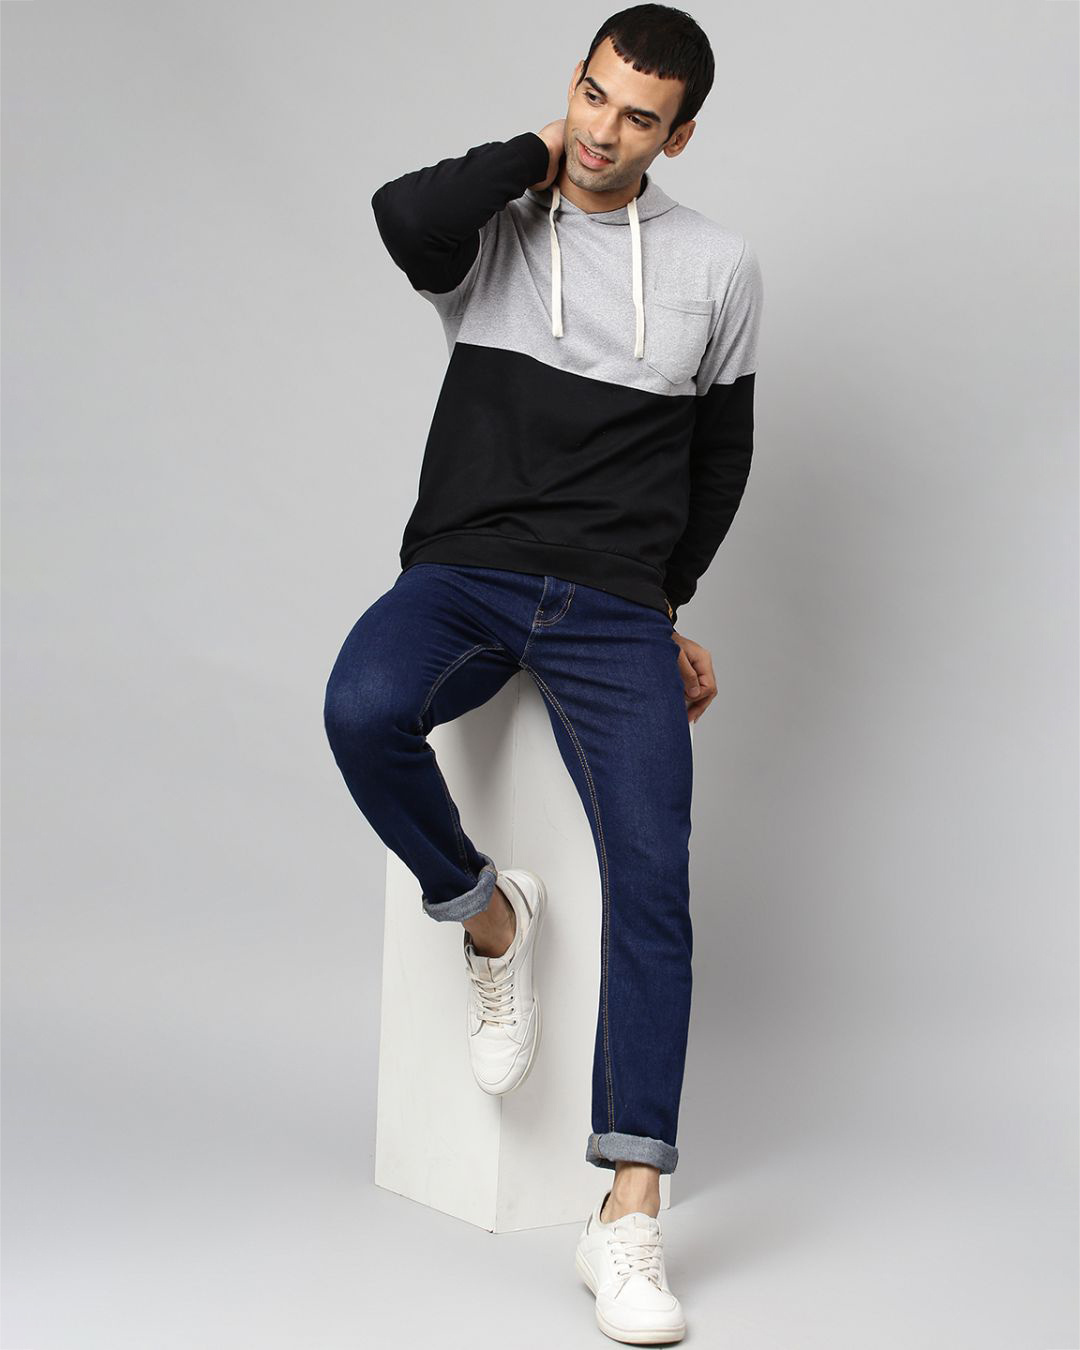 Shop Men's Black & Grey Colorblocked Front Pocket Full Sleeve Stylish Casual Hooded Sweatshirt-Back